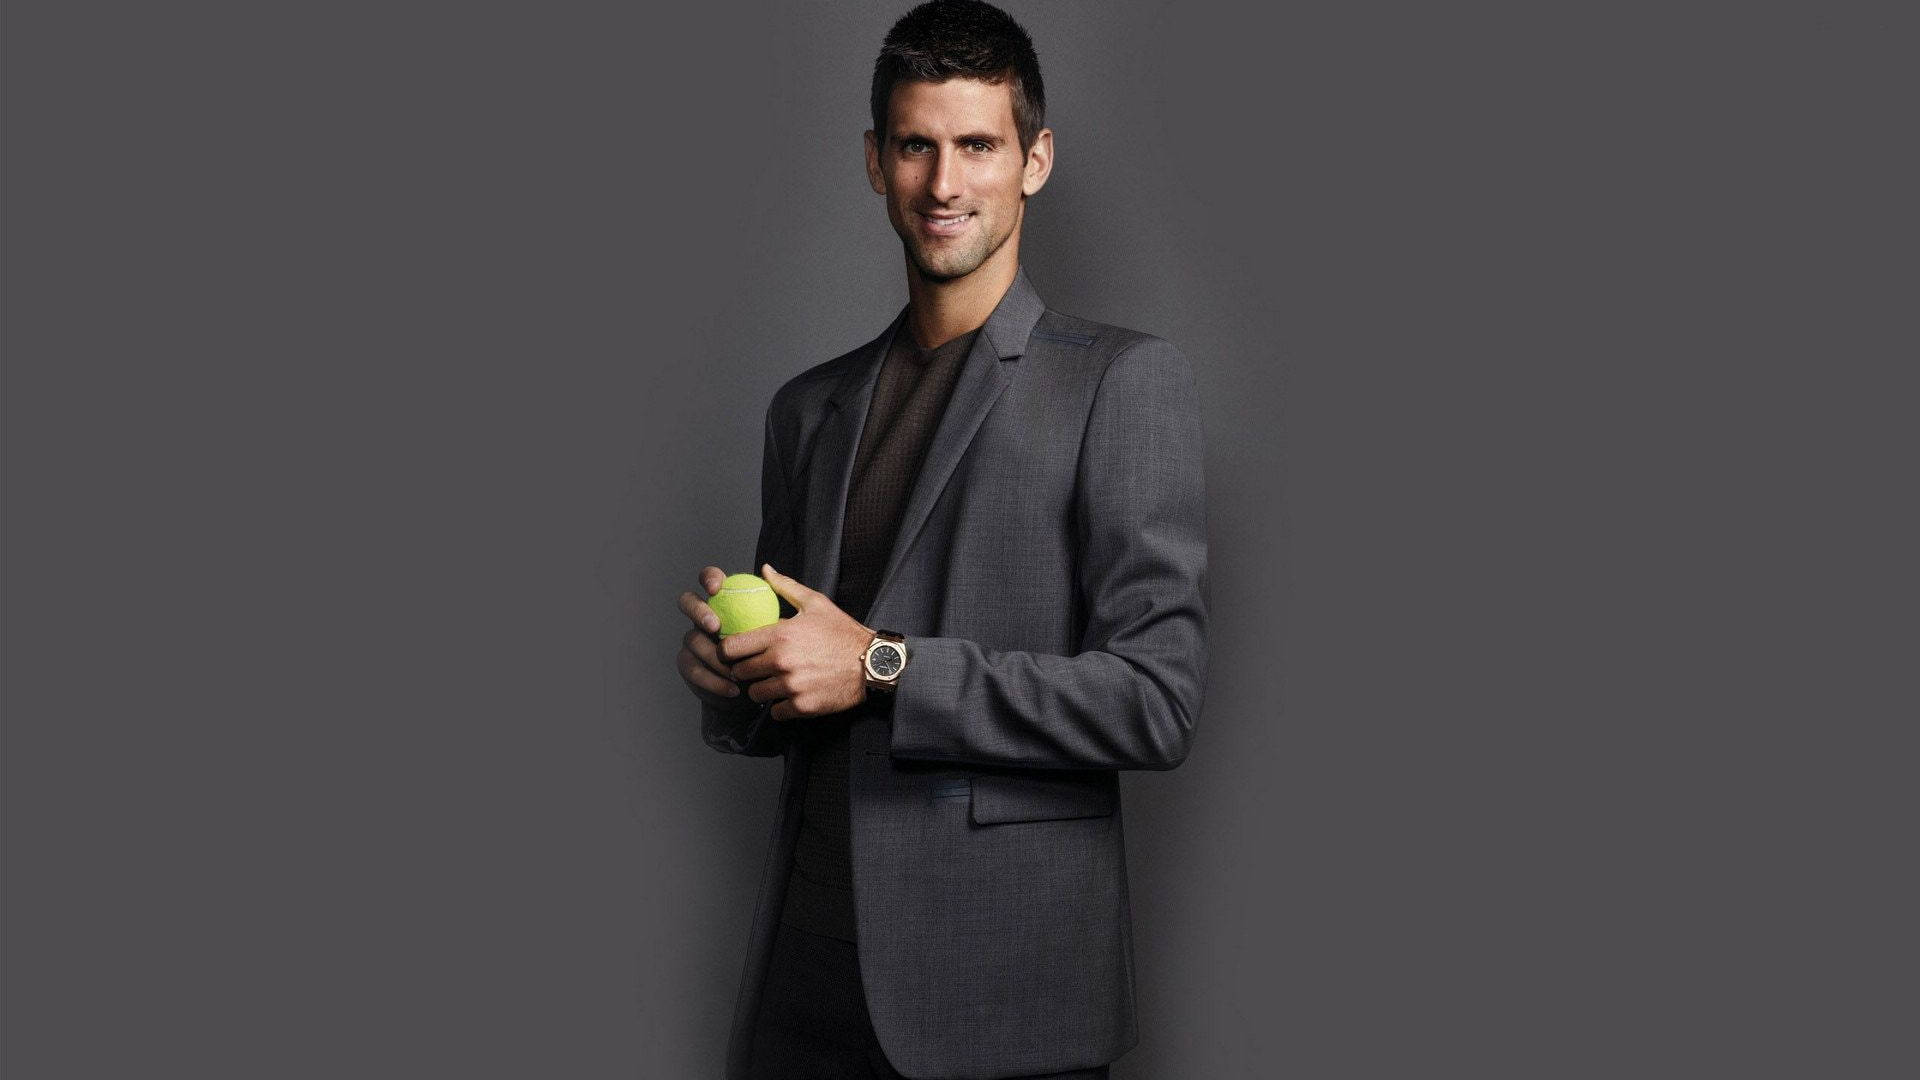 Novak Djokovic Formal Suit wallpaper.